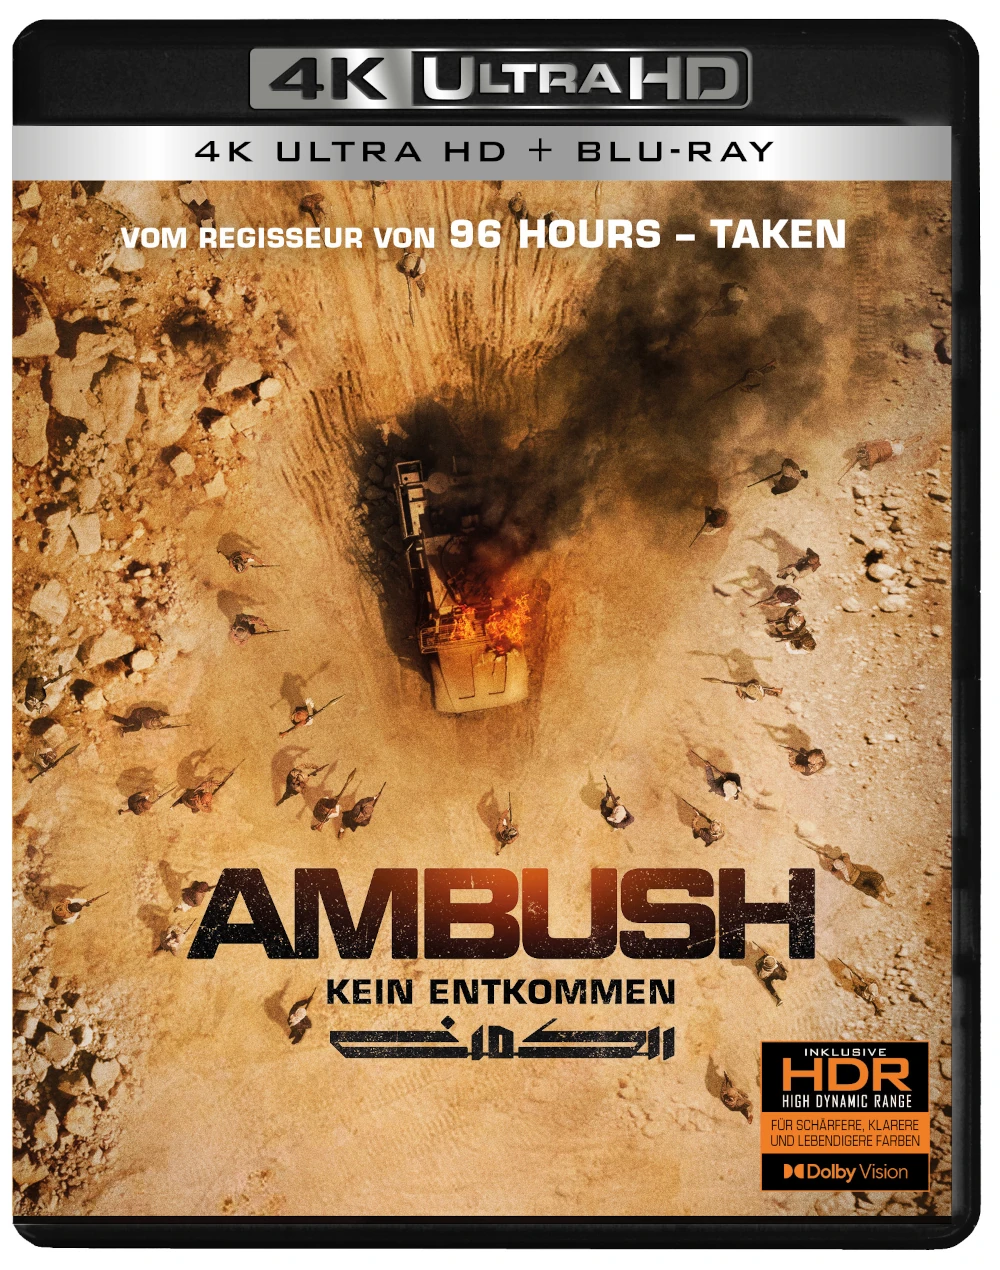 The Ambush Blu-ray Cover